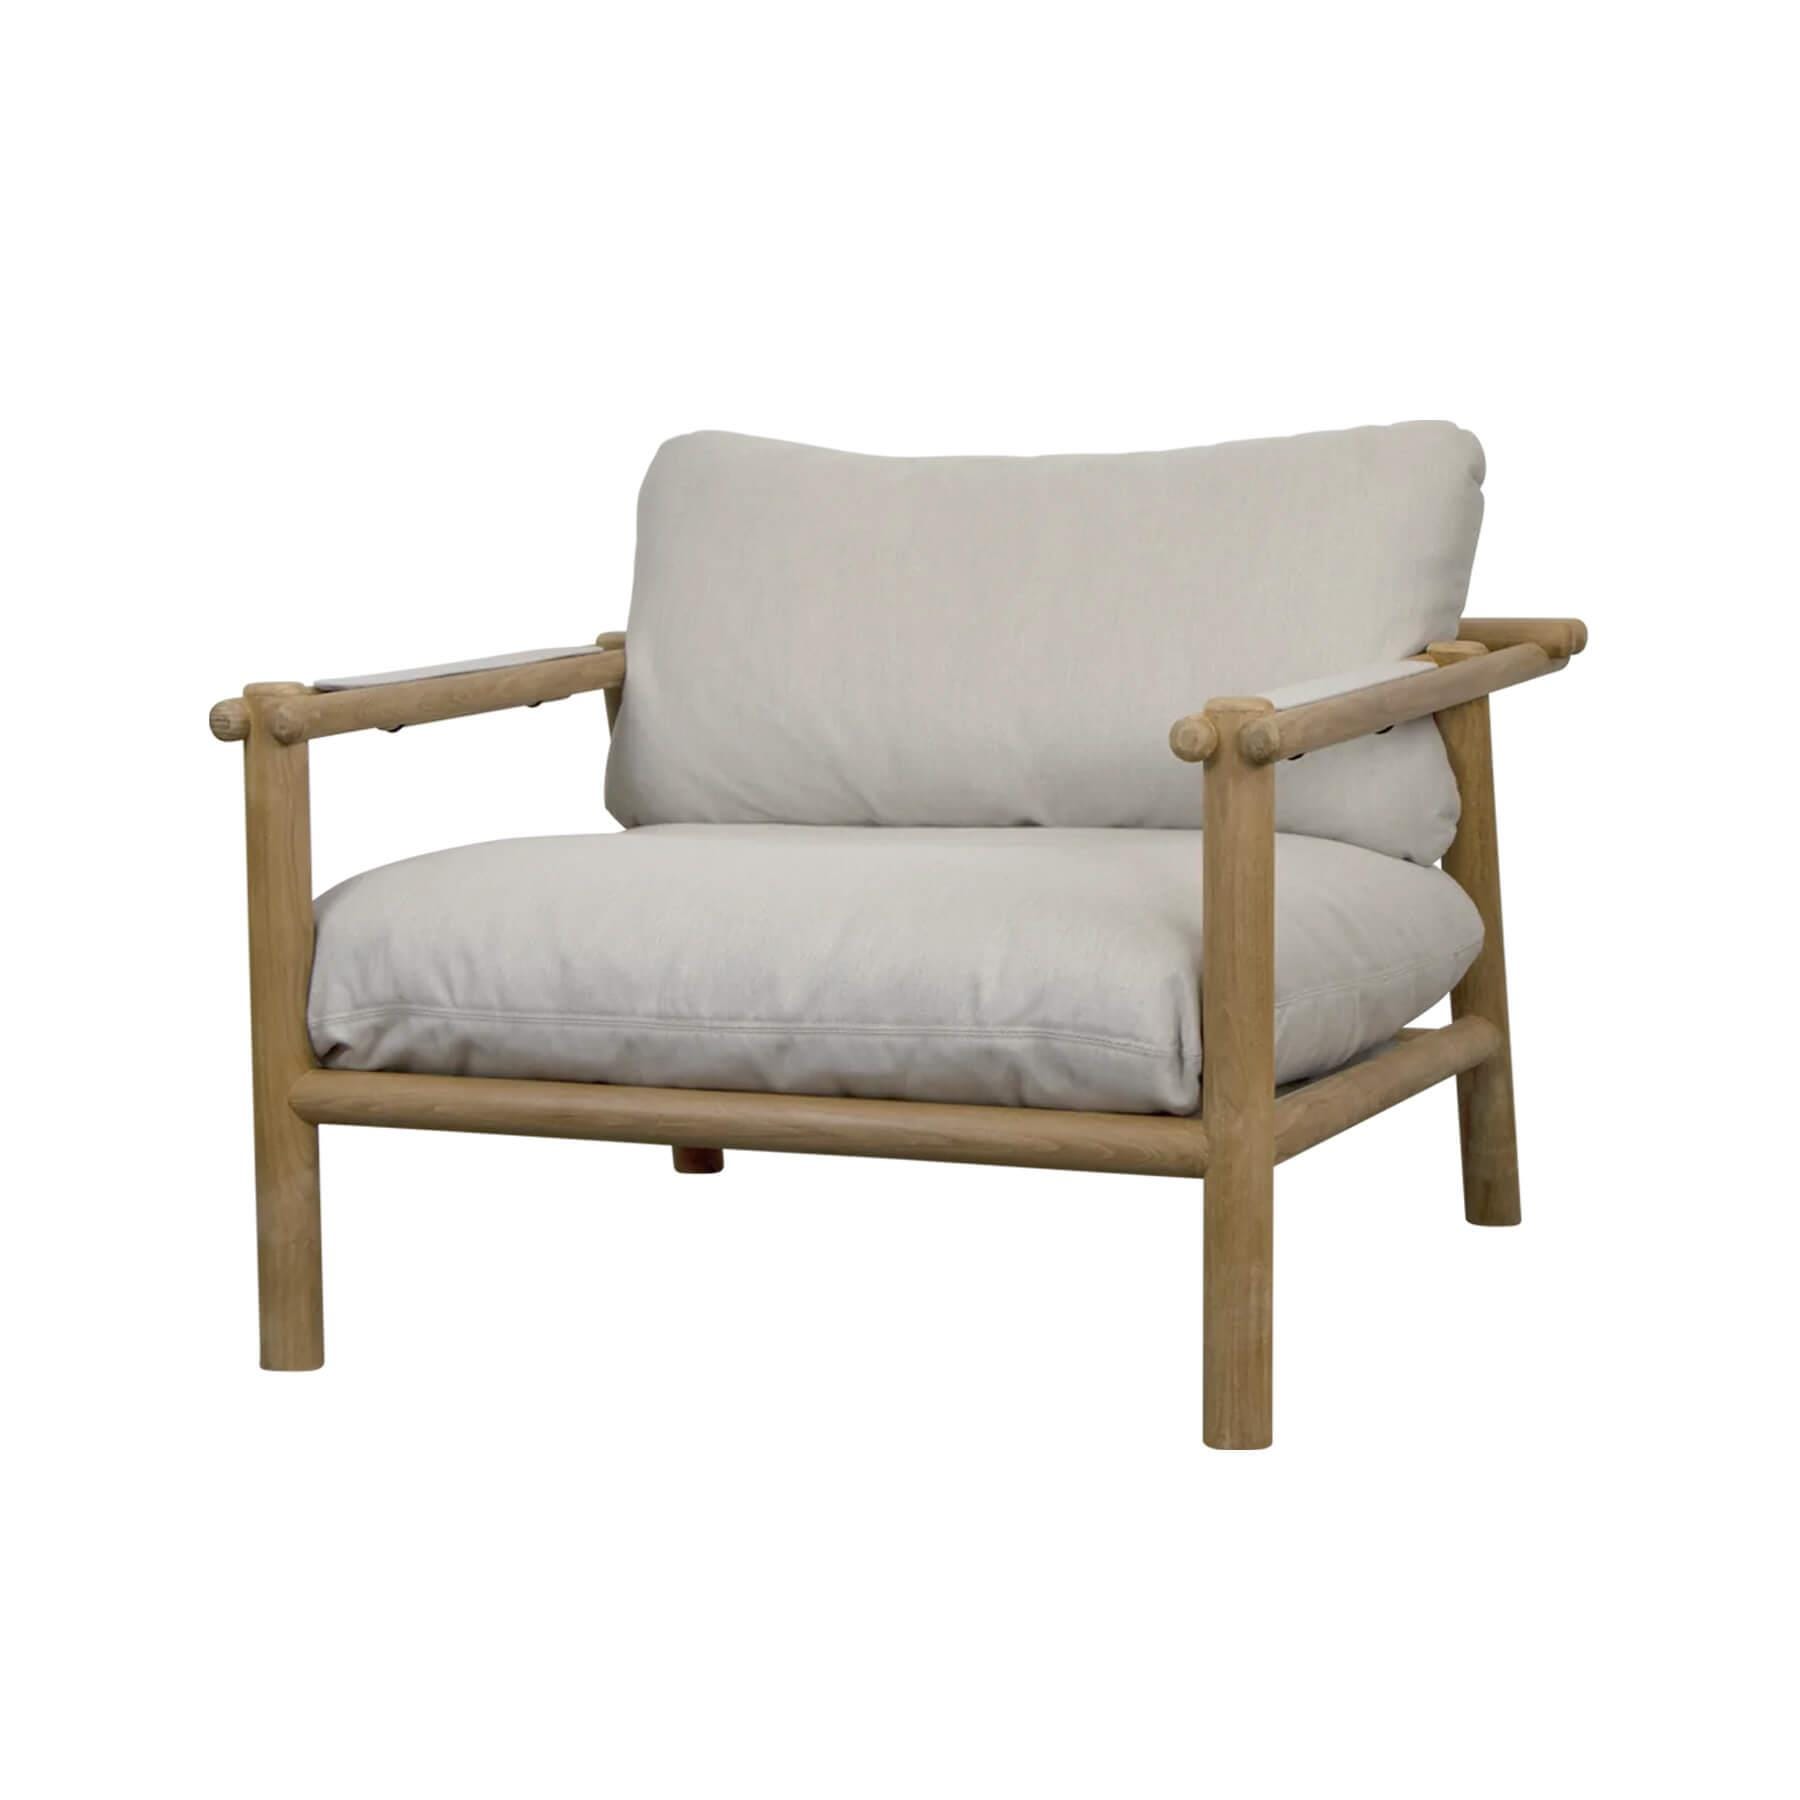 Caneline Sticks Outdoor Lounge Chair Teak Natte Sand Cushion Grey